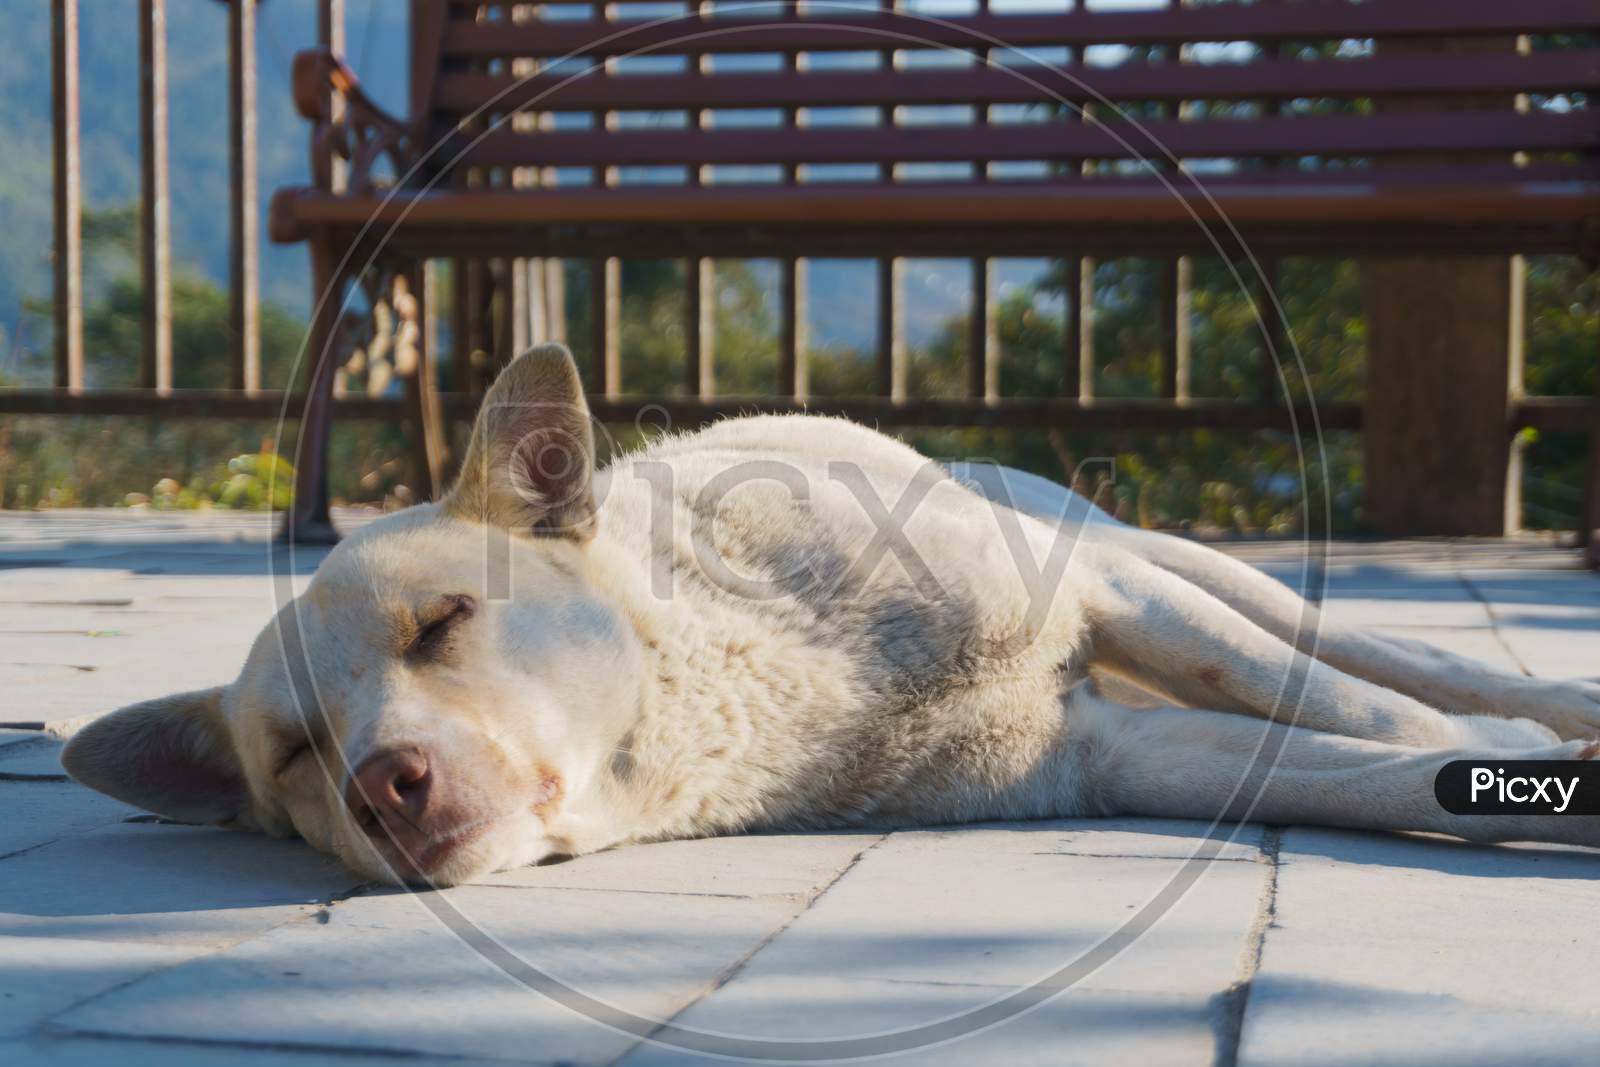 a white dog sleep peacefylly in an empty garden (park) on person seen, empty bench.